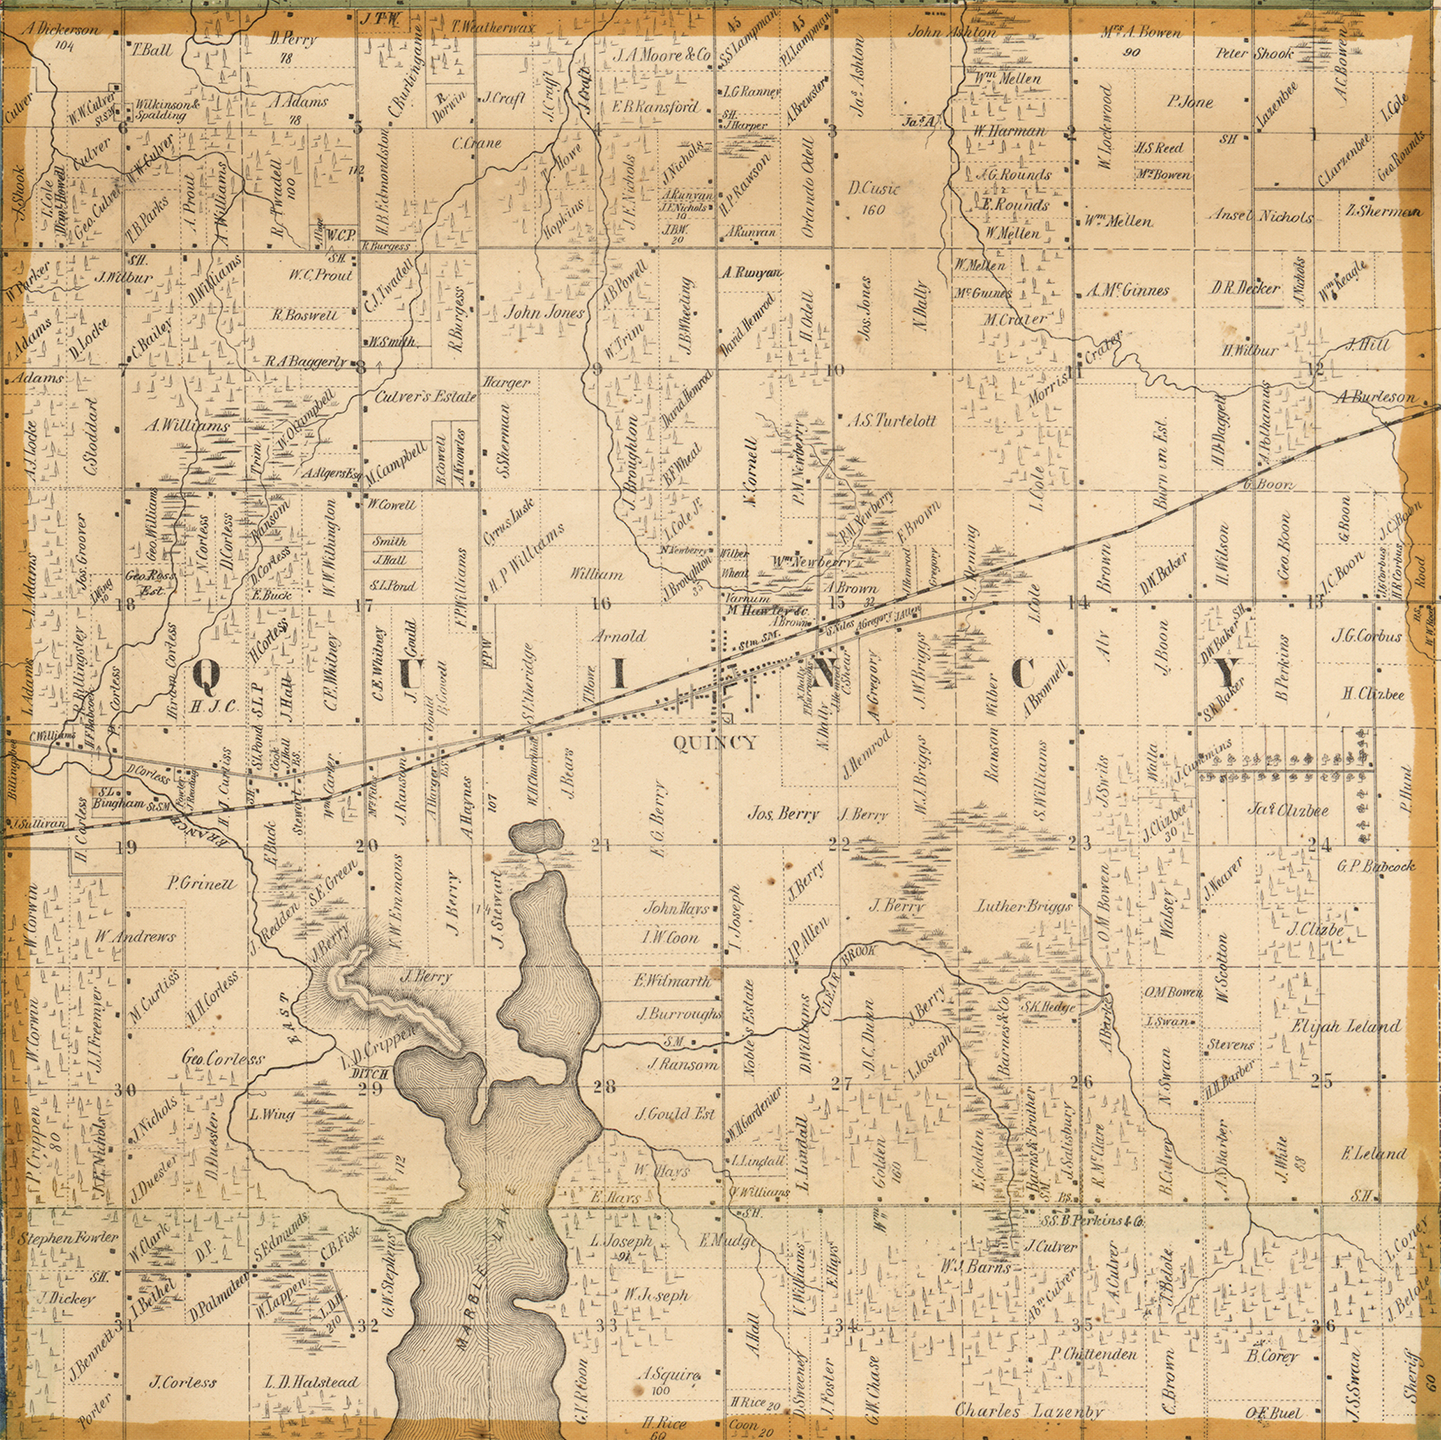 1858 Quincy Township, Michigan landownership map